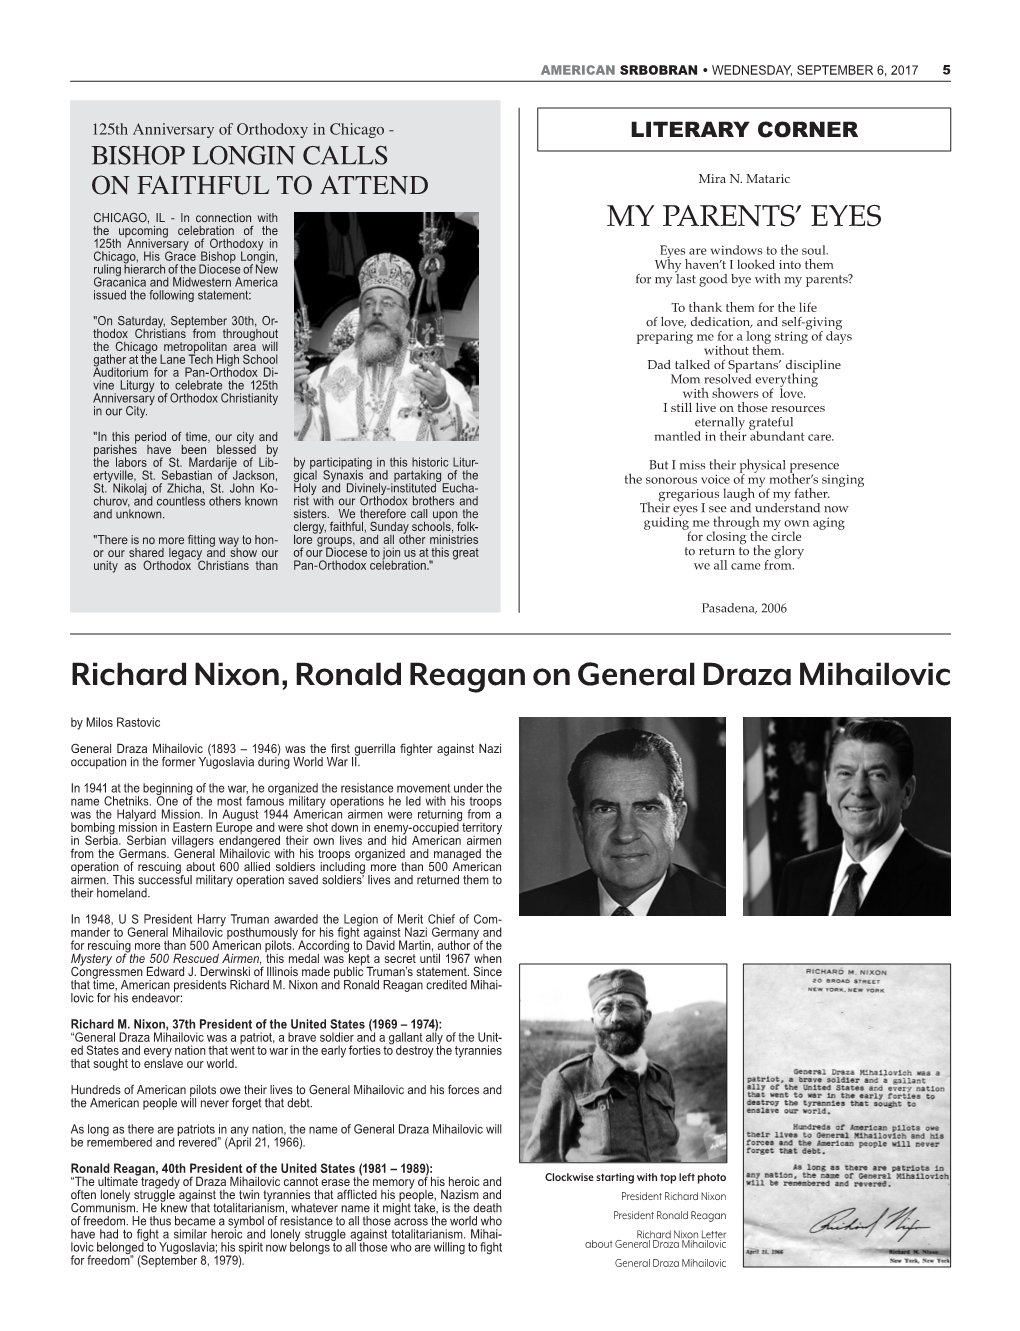 Richard Nixon, Ronald Reagan on General Draza Mihailovic by Milos Rastovic